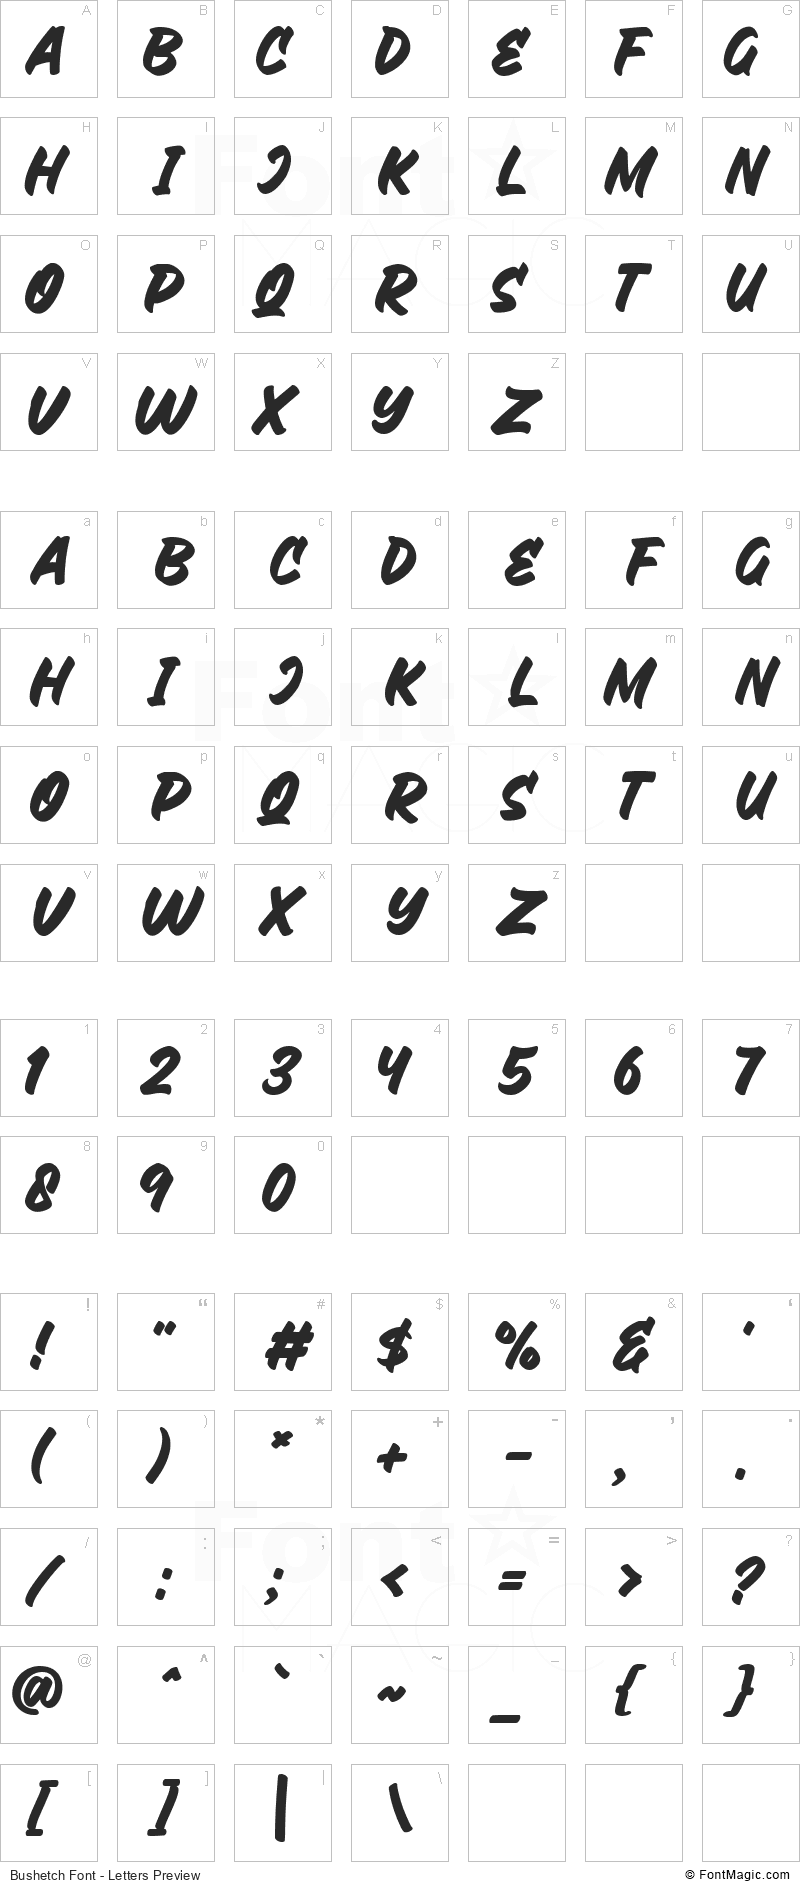 Bushetch Font - All Latters Preview Chart